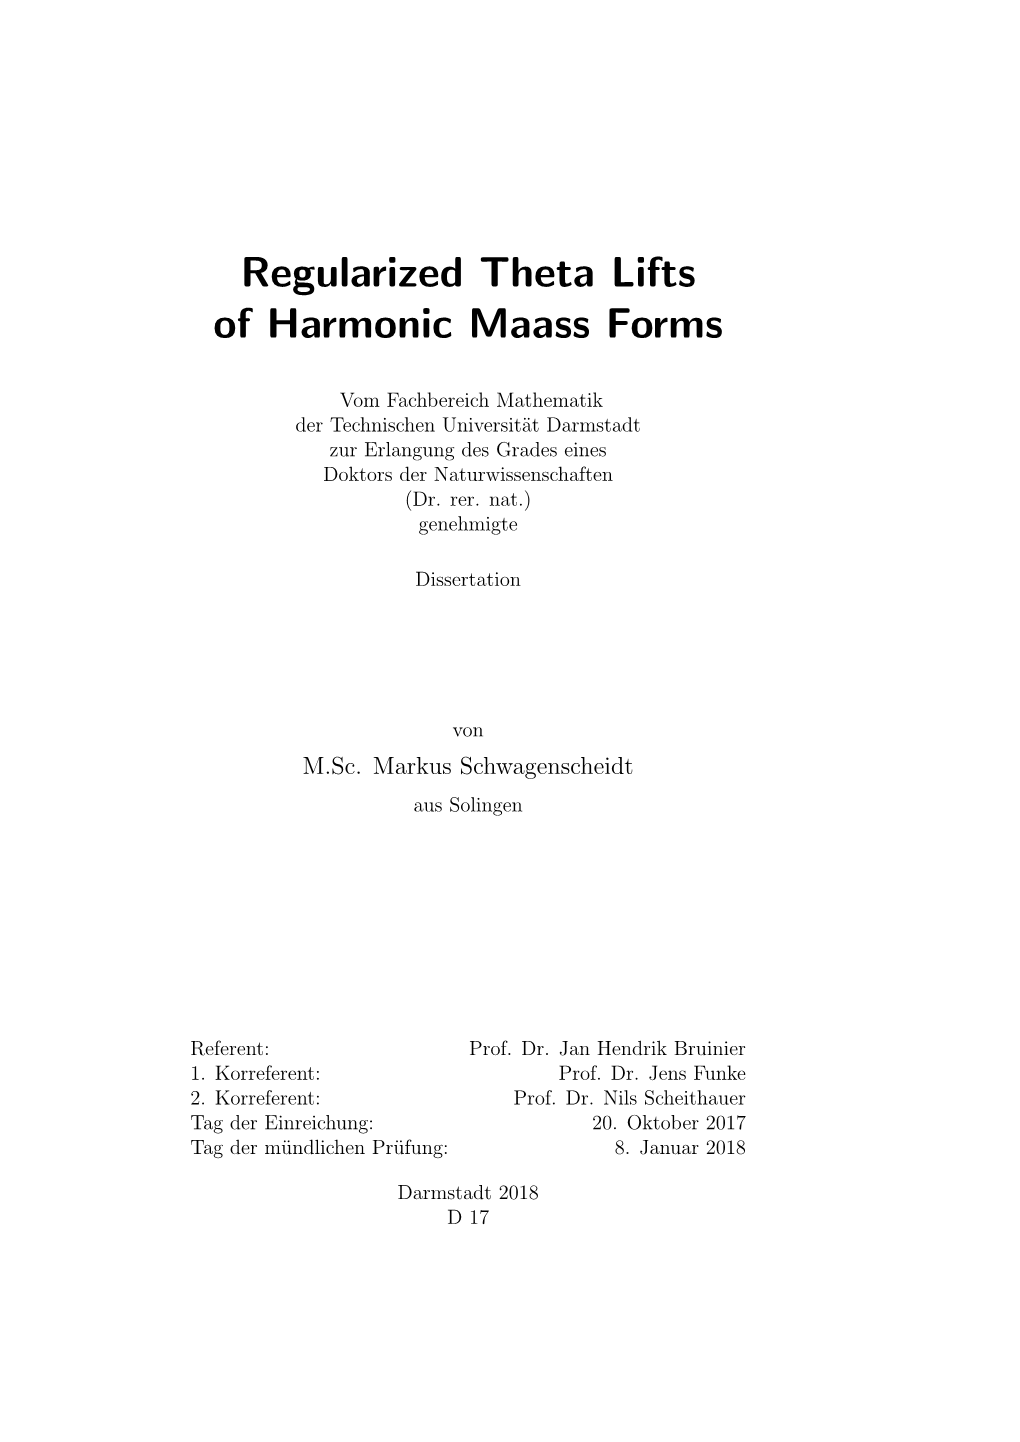 Regularized Theta Lifts of Harmonic Maass Forms